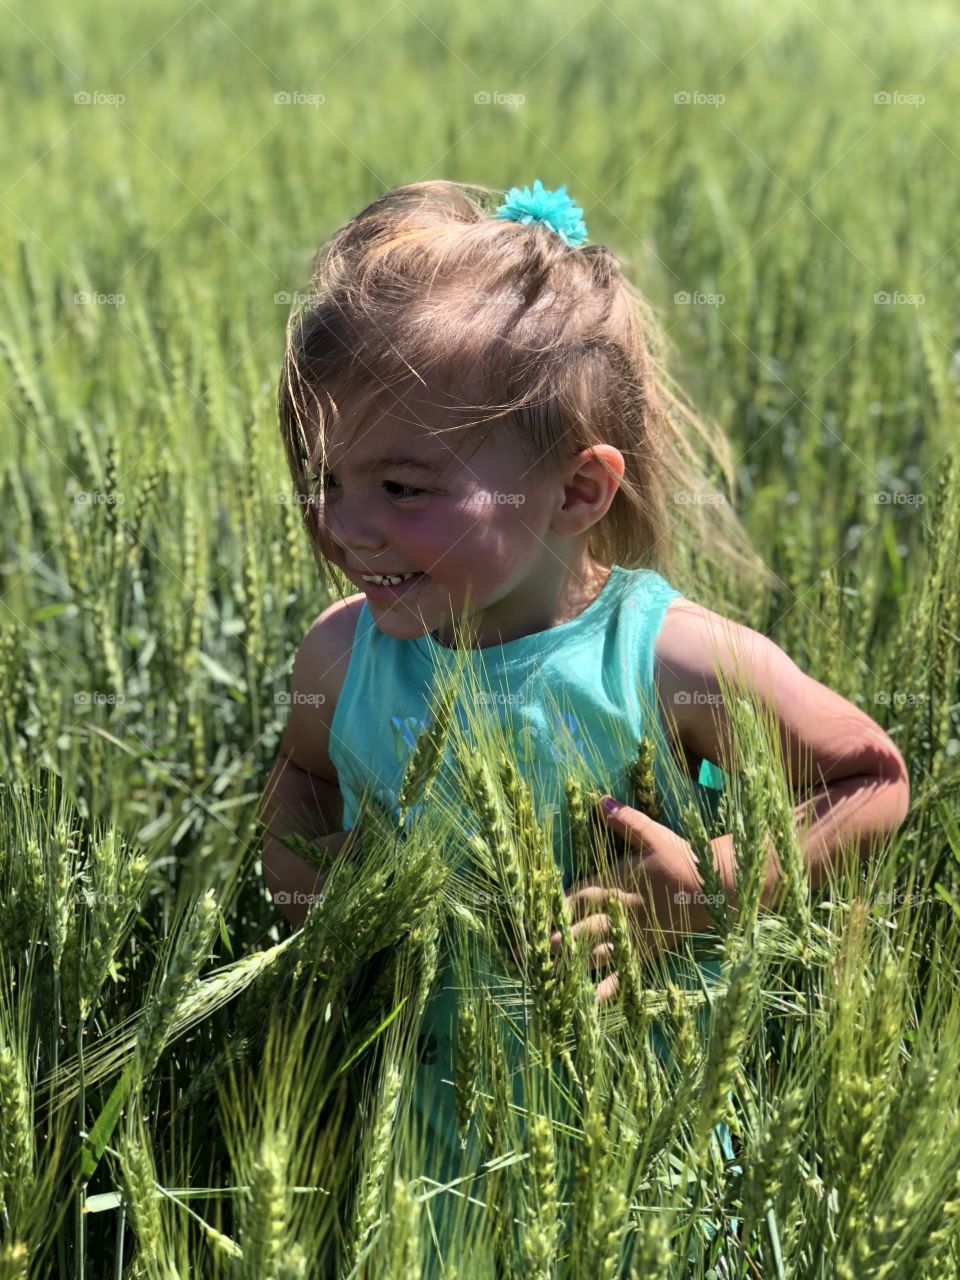 Wheat field, pretty girl, happy